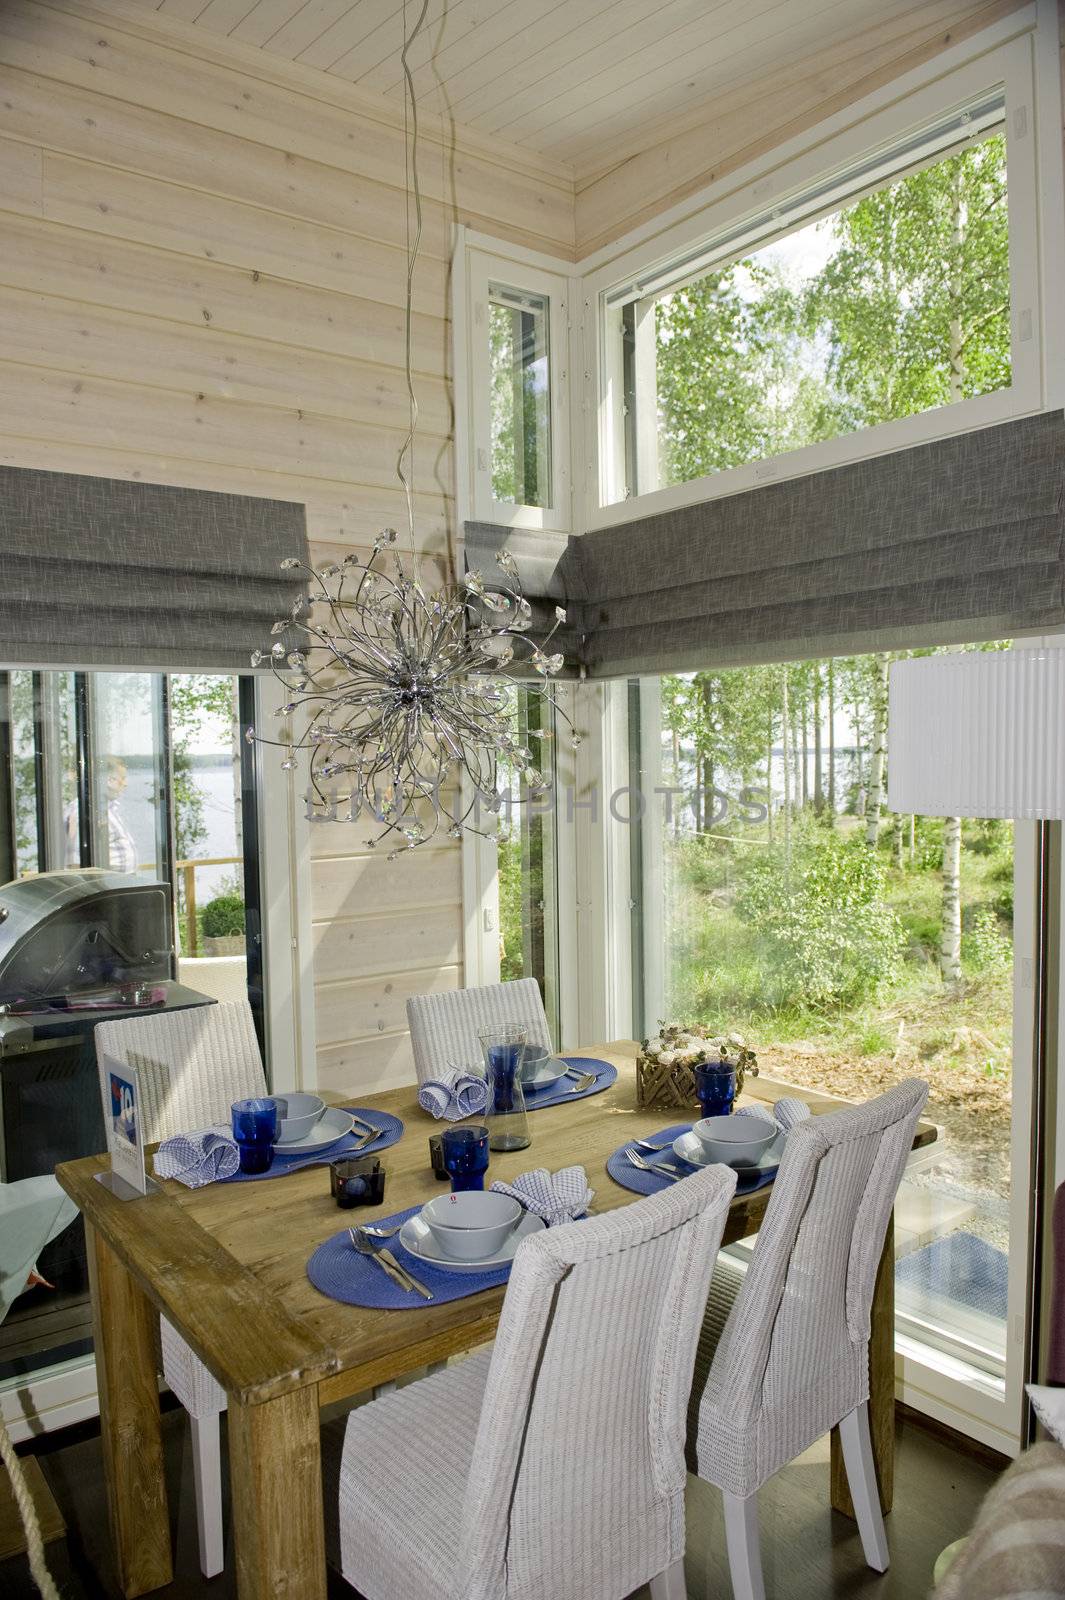 Scandinavian house interior by Alenmax